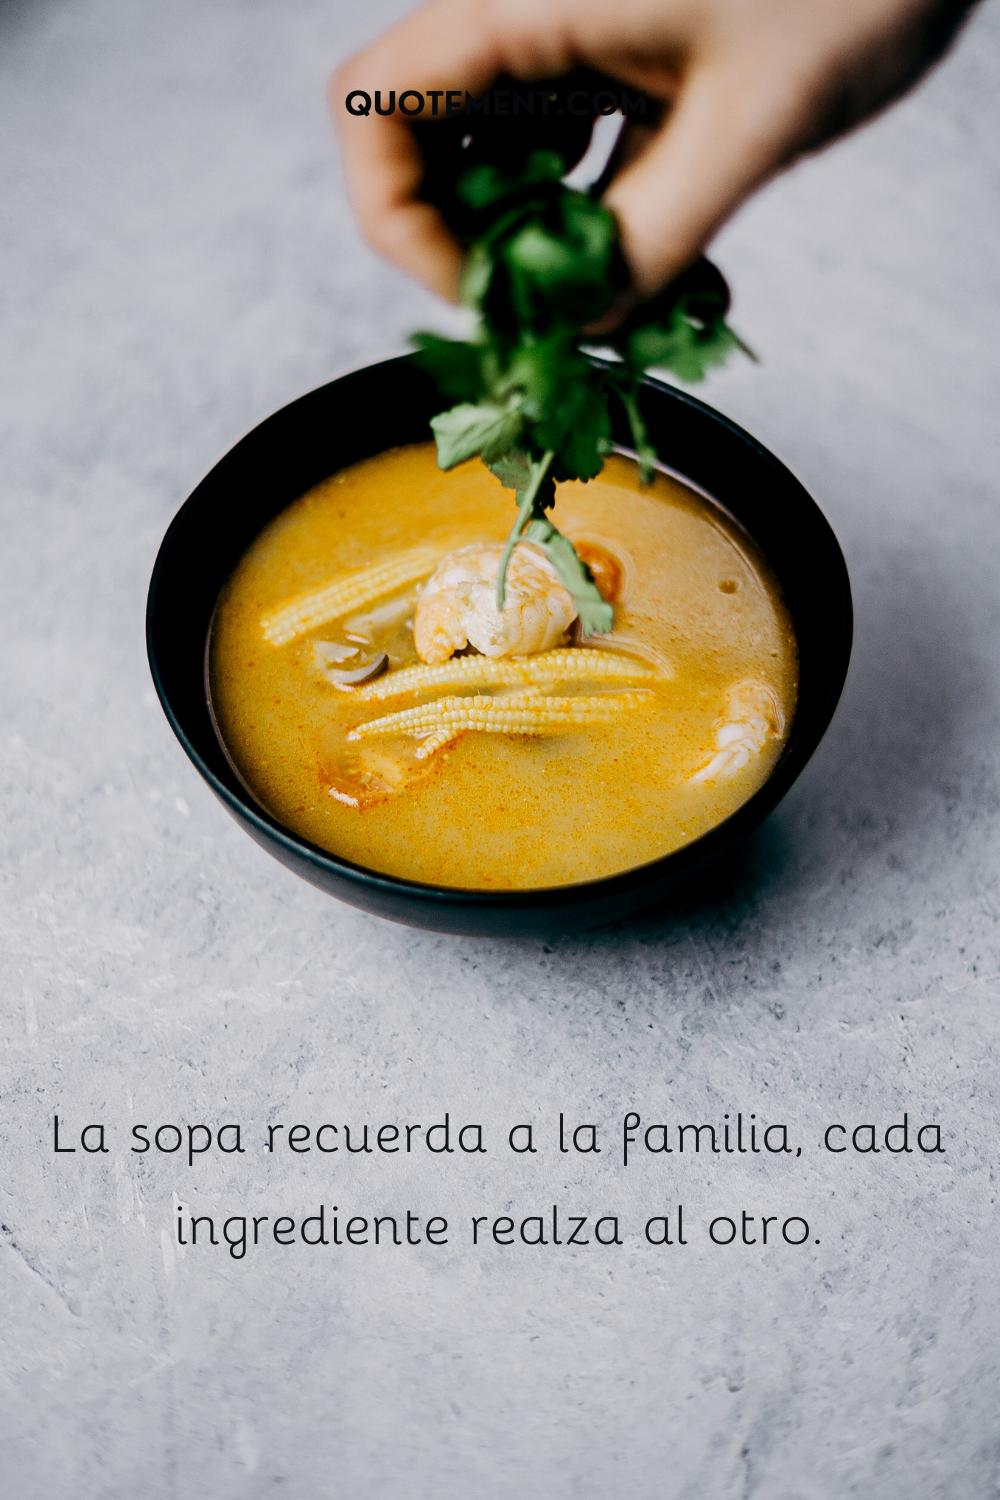 La sopa te recuerda a la familia